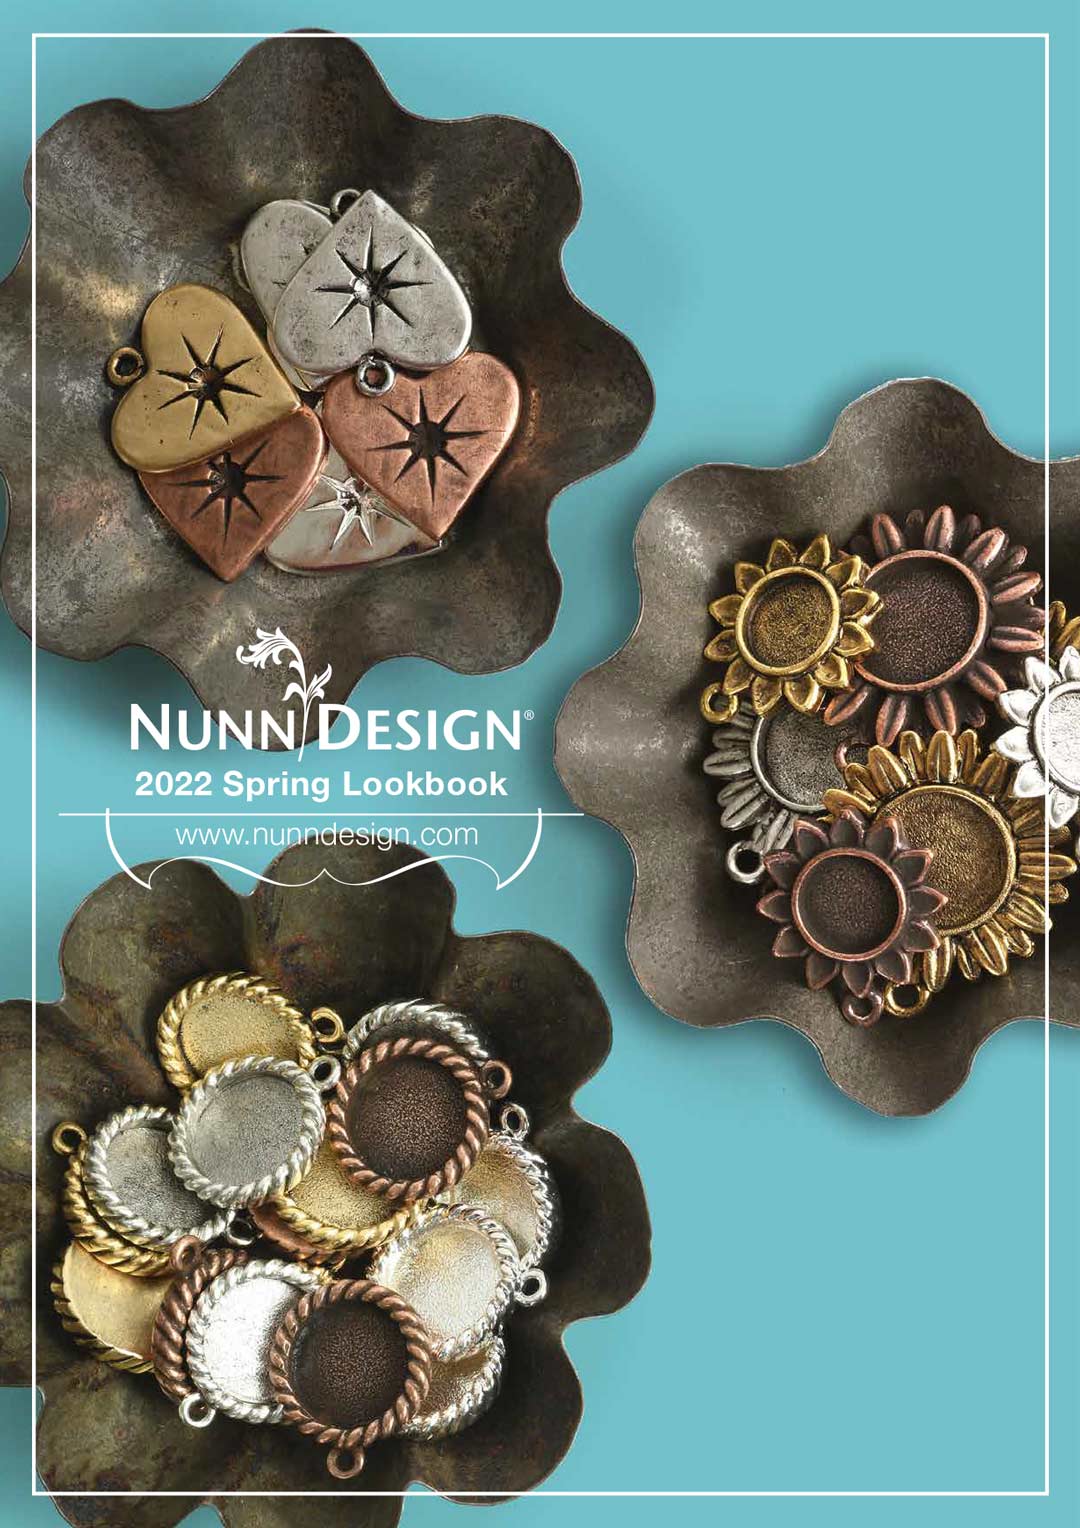 Nunn Design 2022 Latest Lookbook!